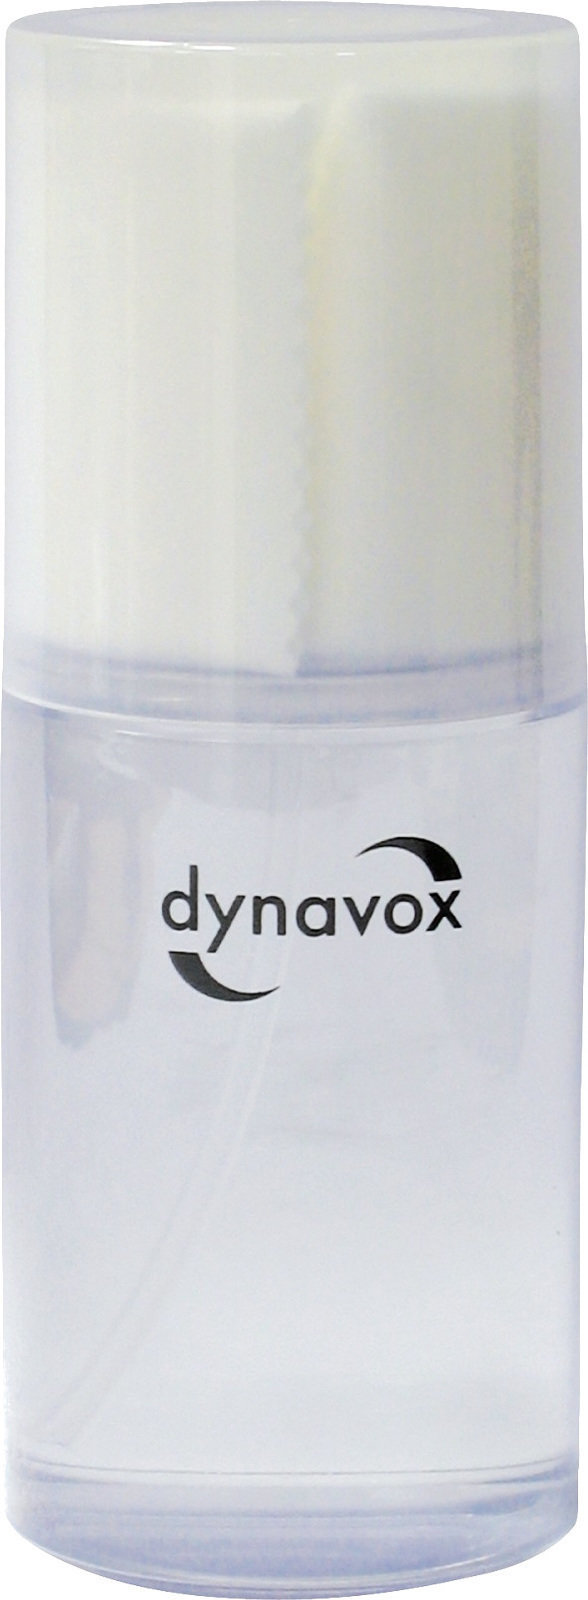 Reinigingsmiddel voor LP's Dynavox Cleaning Fluid Cleaning Fluid Reinigingsmiddel voor LP's